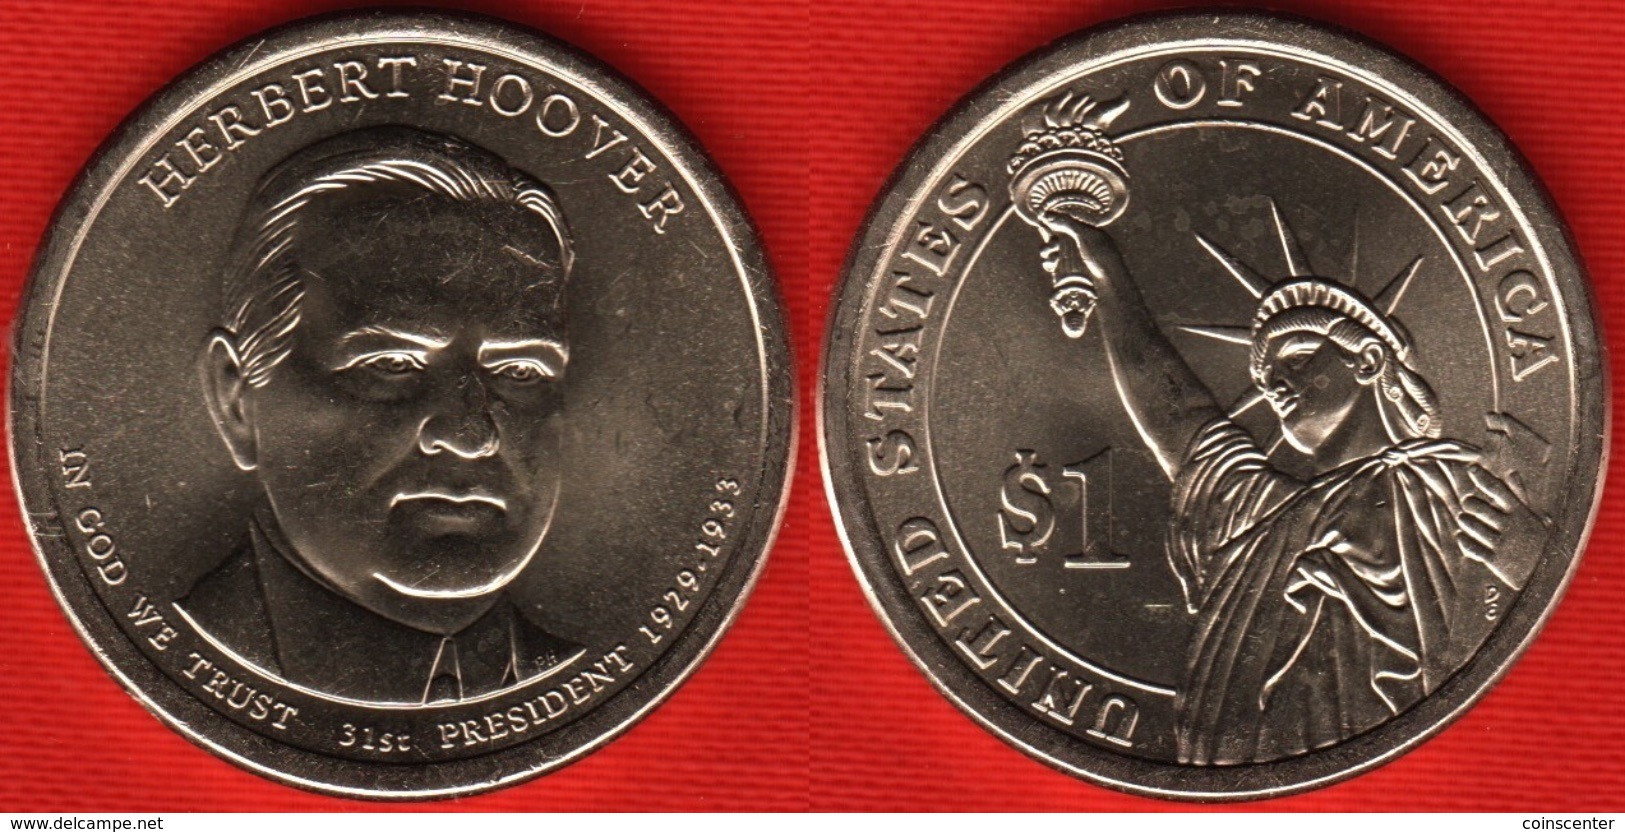 USA 1 Dollar 2014 D Mint "Herbert Hoover" UNC - 2007-…: Presidents